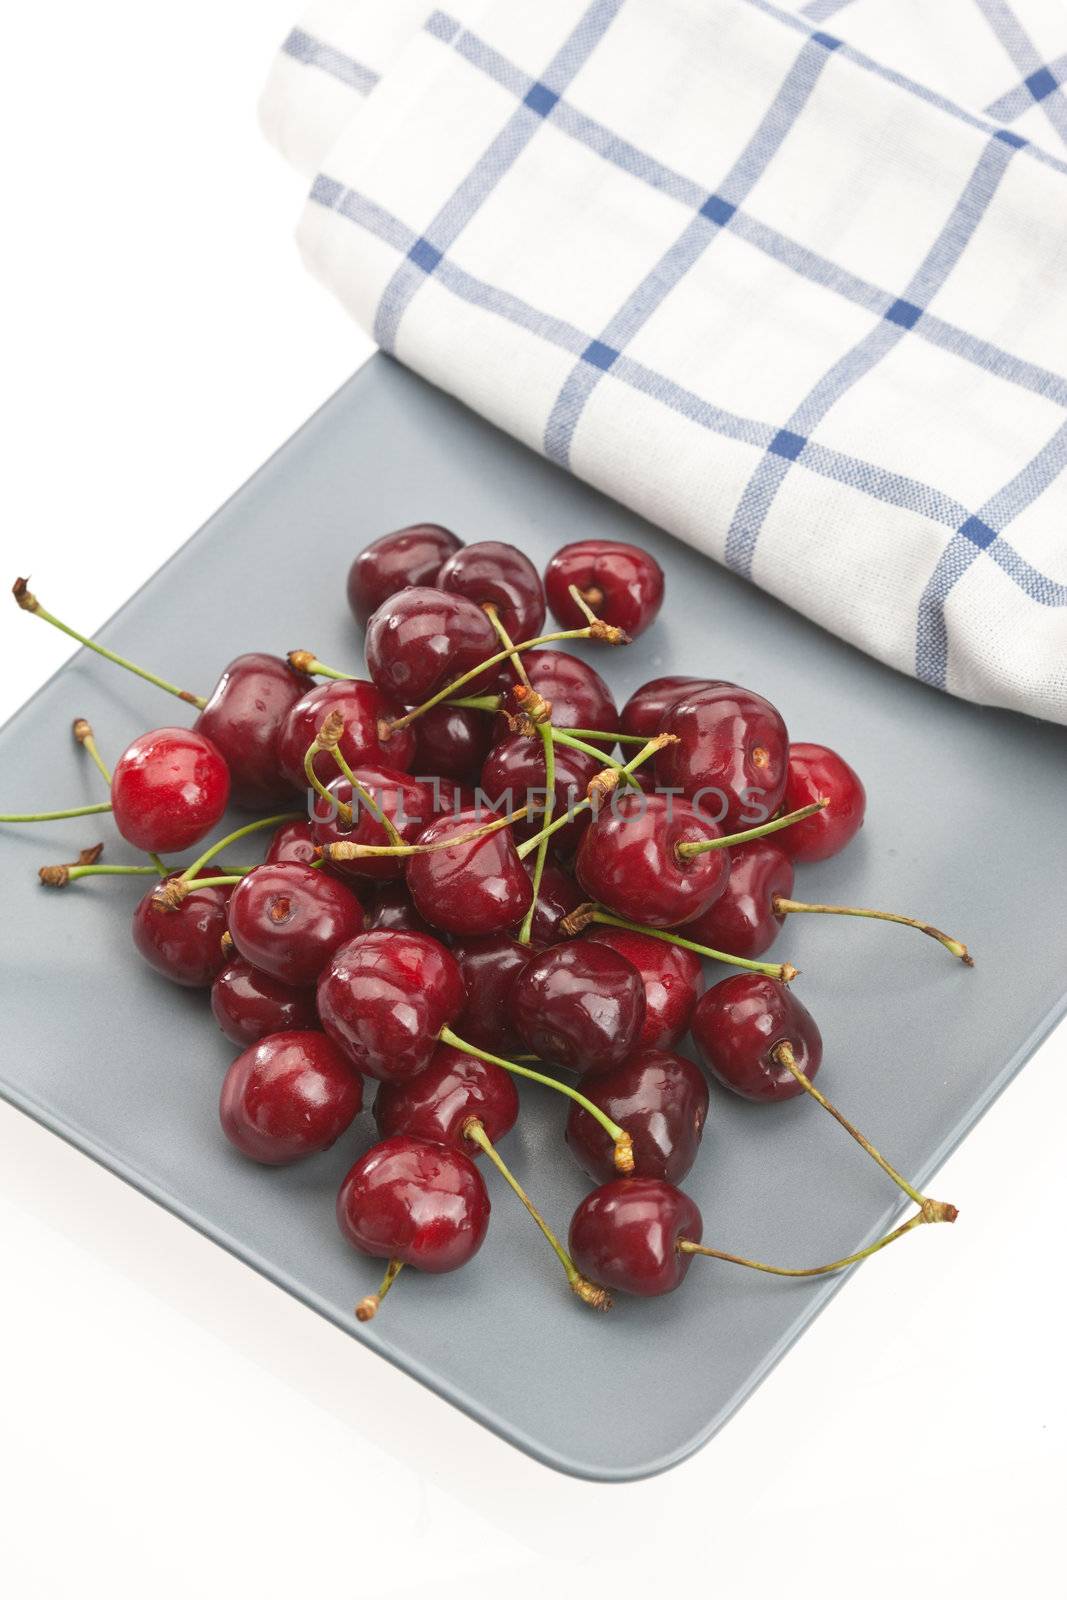 food series: tasty ripe and juicy cherry